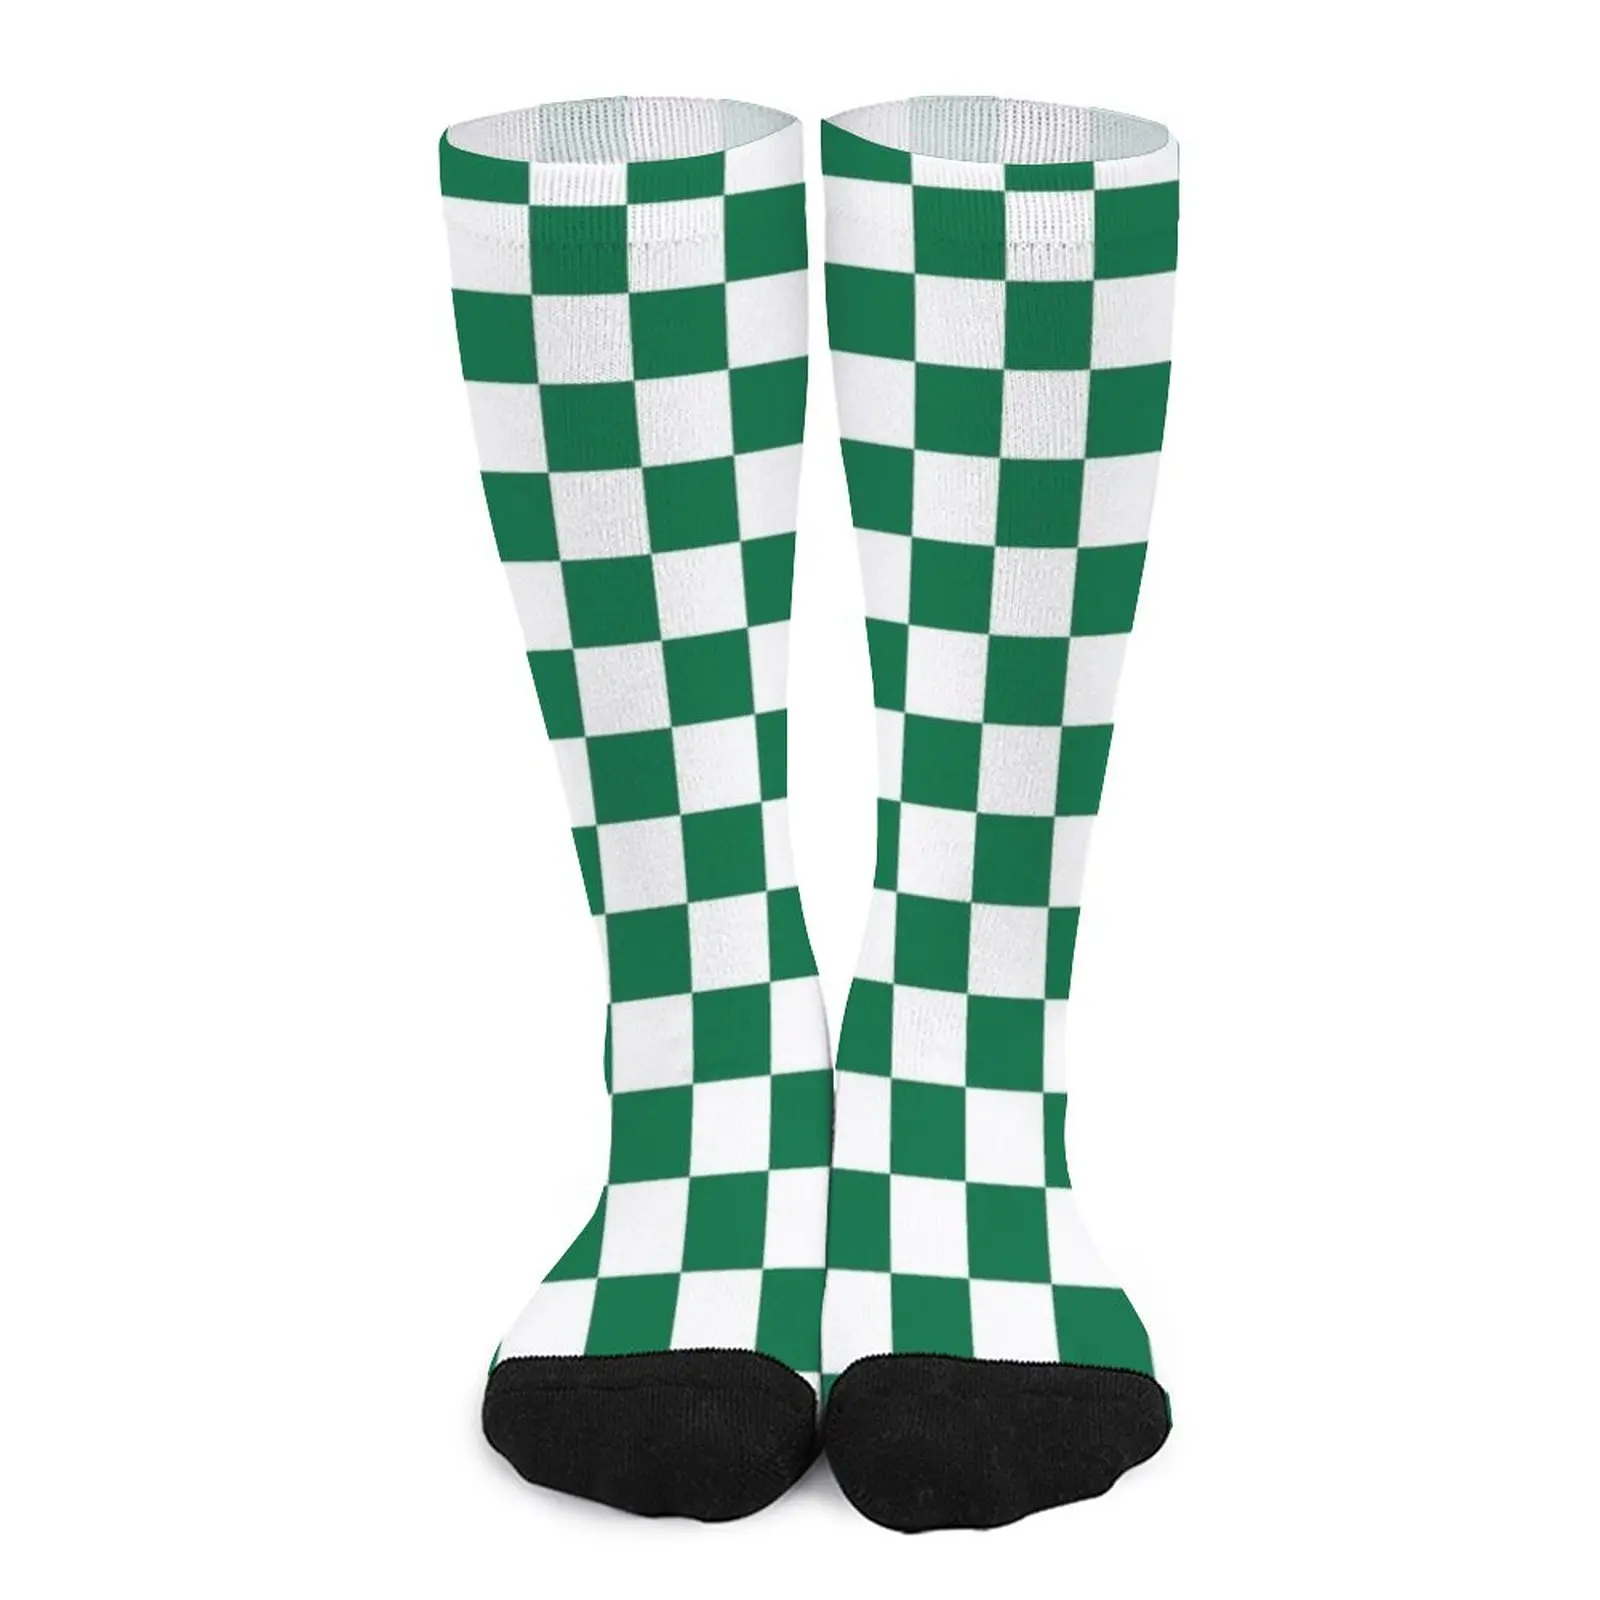 White and Cadmium Green Checkerboard Socks hiking Mens socks